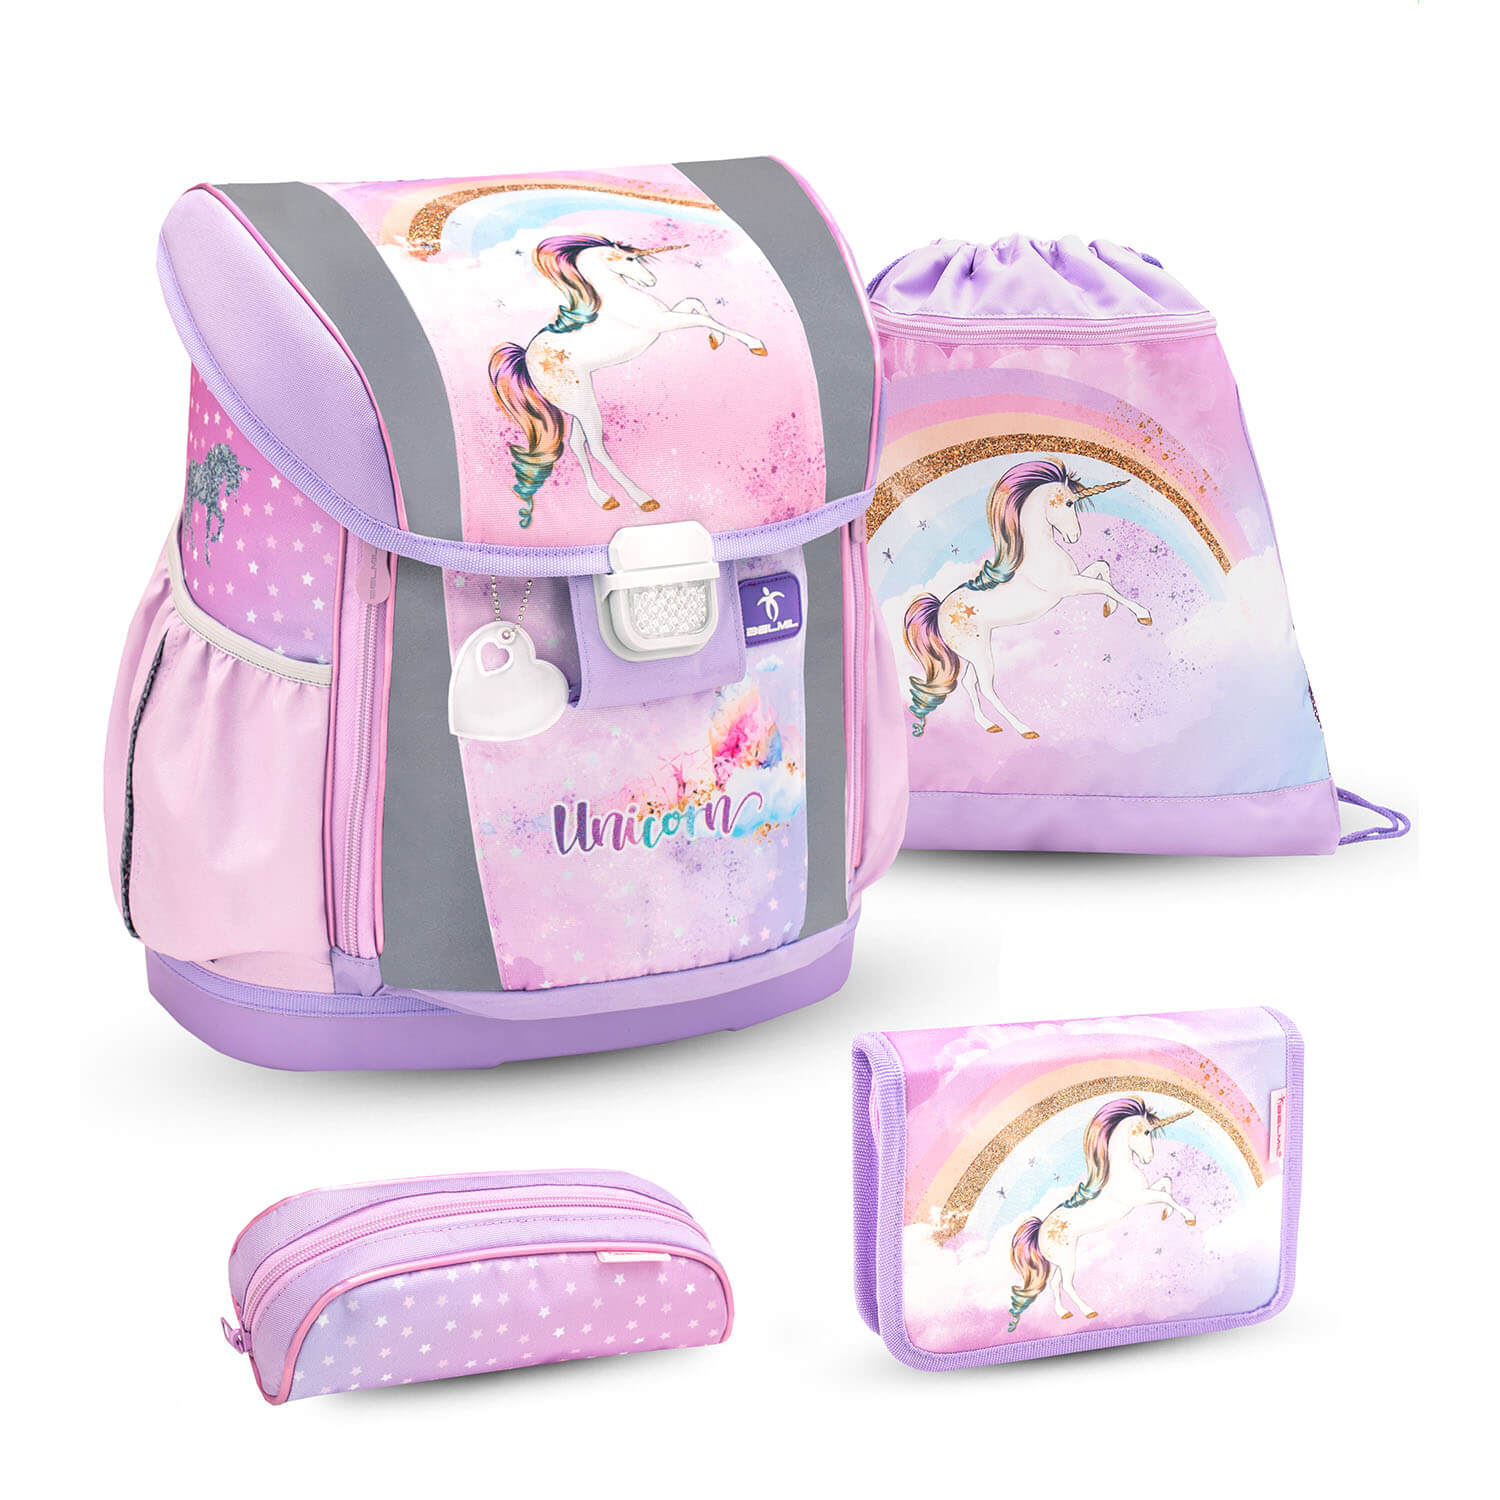 Customize Me Rainbow Unicorn schoolbag set 4 pcs